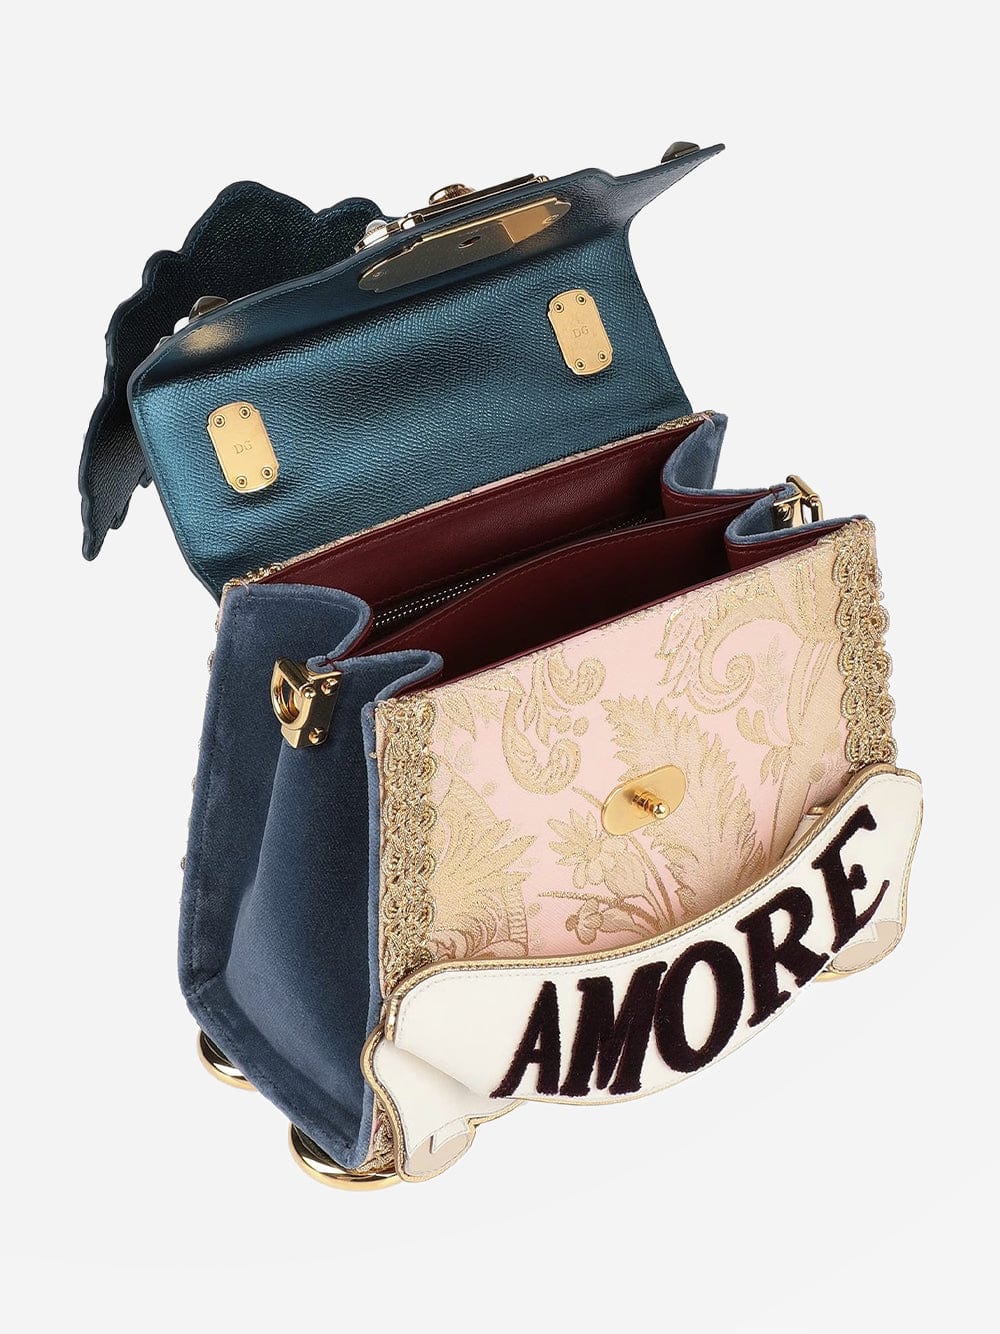 Dolce & Gabbana Amore Tote Bag